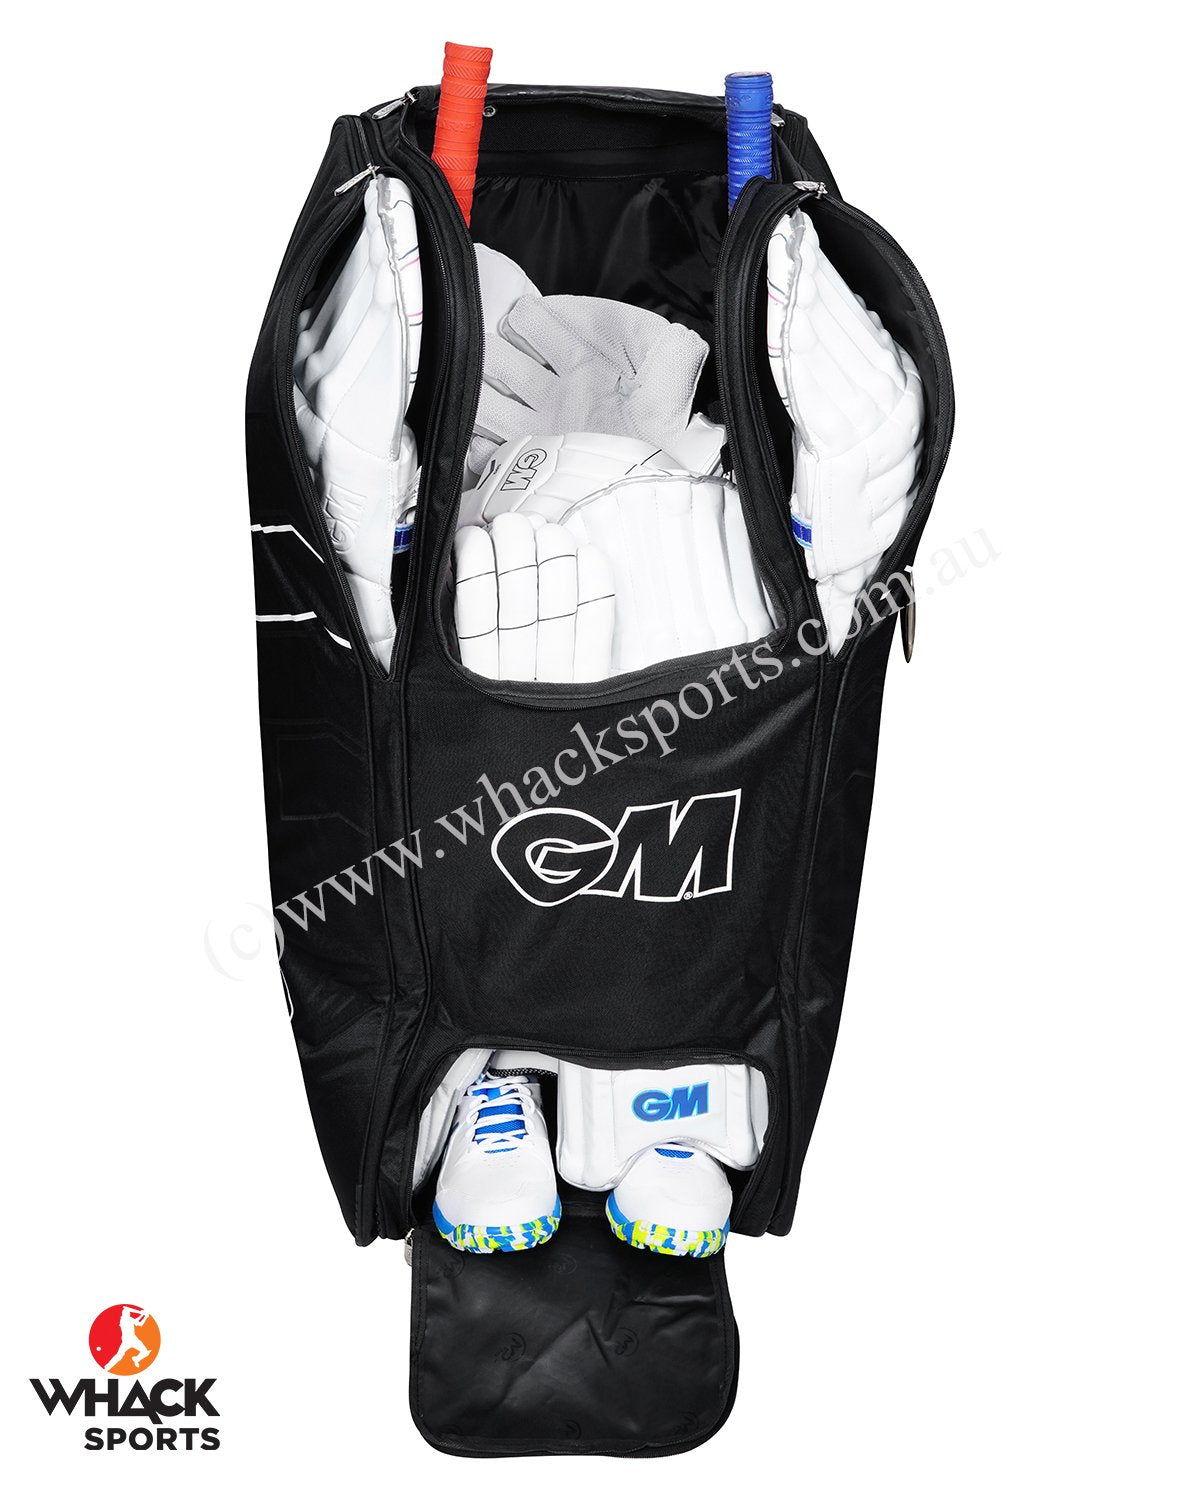 GM Original Wheelie Duffle Cricket Kit Bag (Navy)…